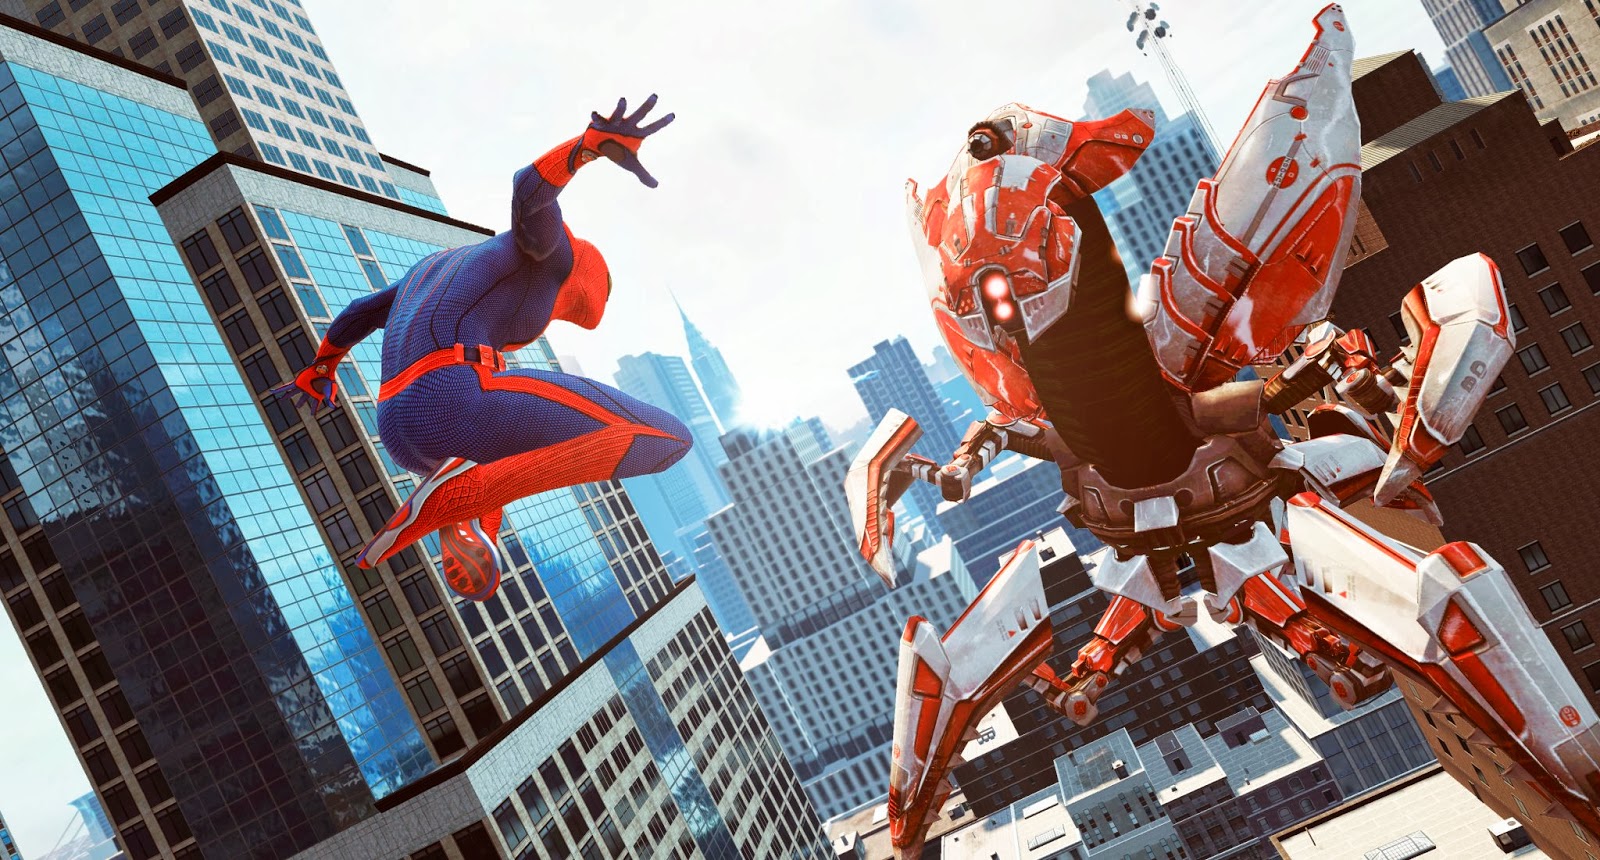 Man this game. Spider-man 2 (игра). The amazing Spider-man игра. Амазинг Спайдермен 2. Spider-man 2 игра 2014.